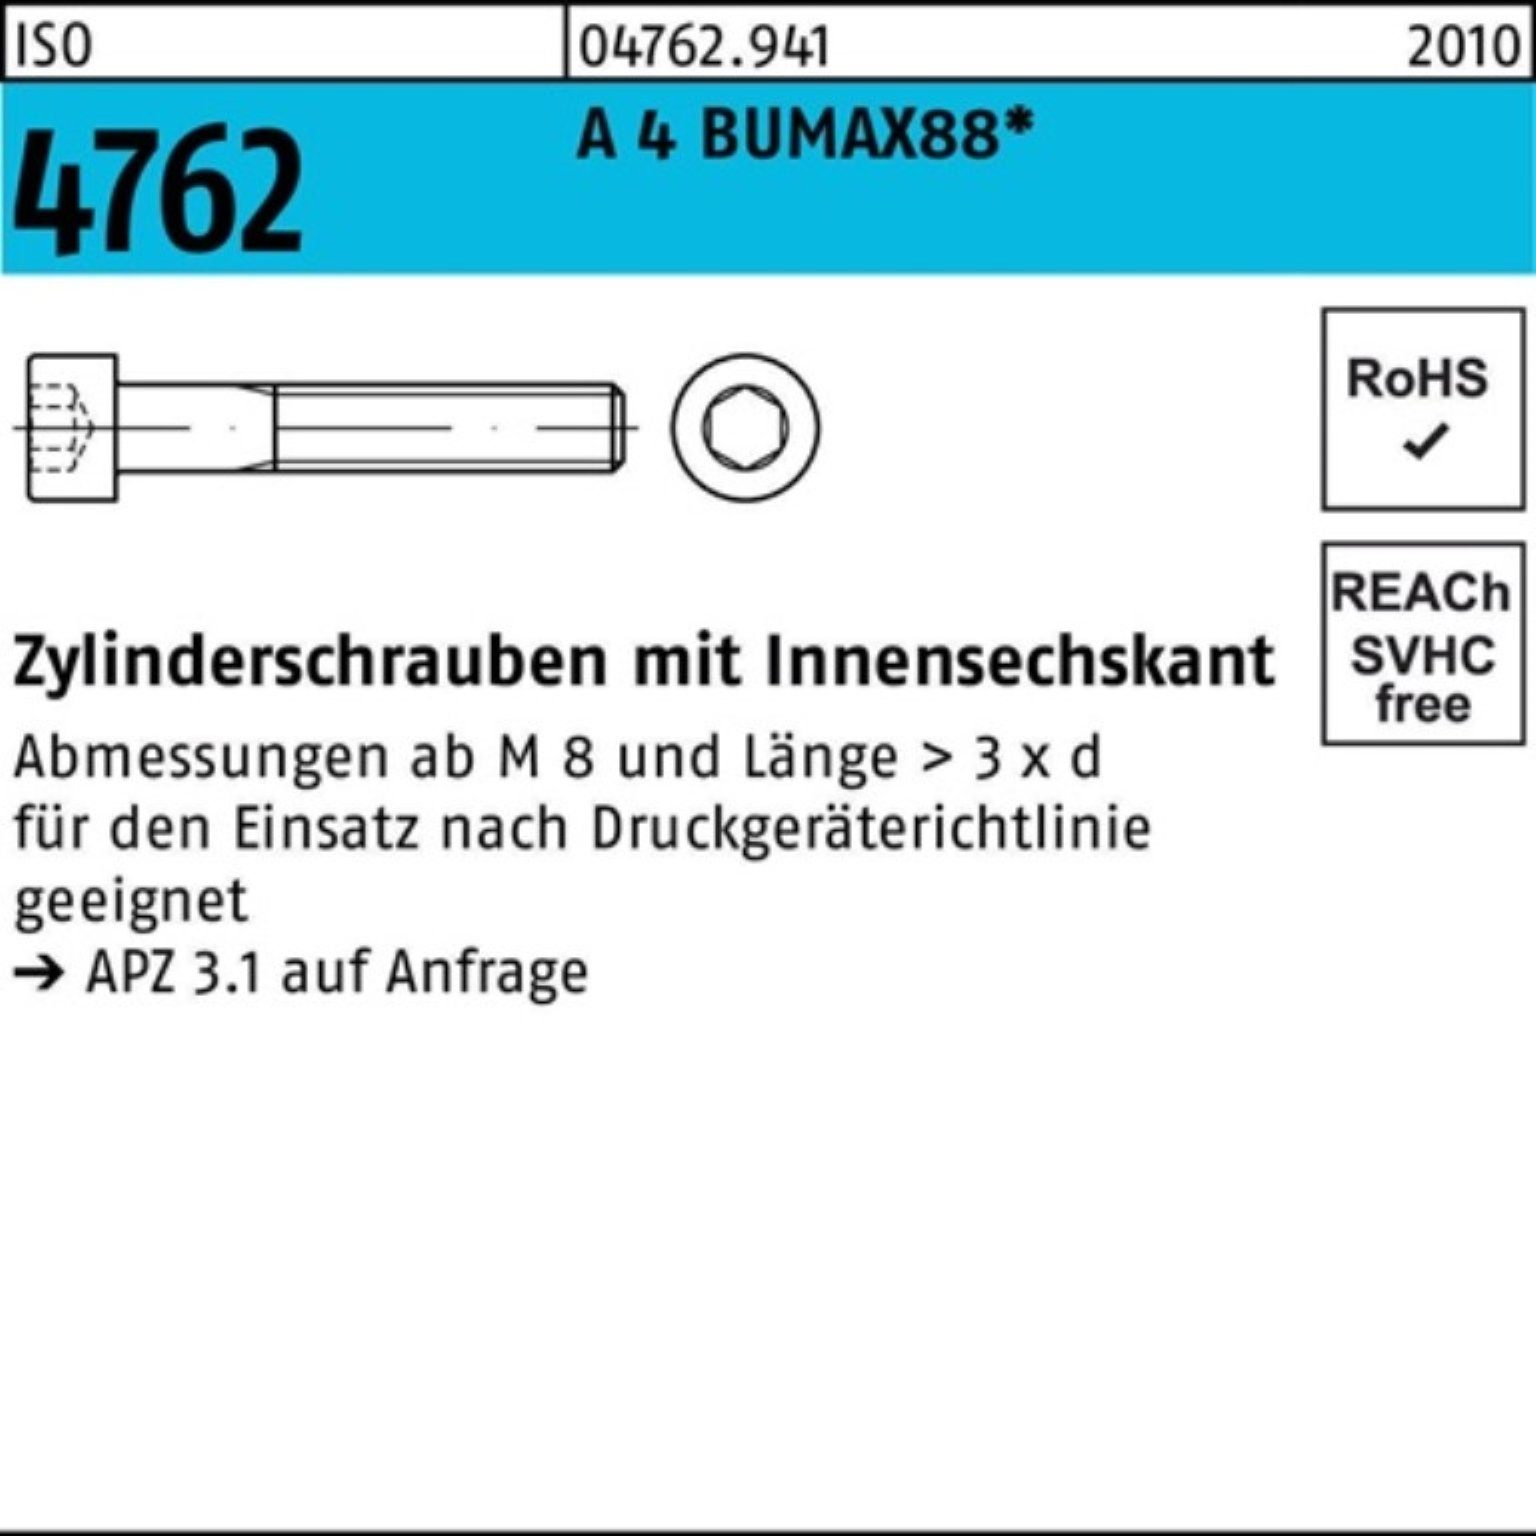 Bufab Zylinderschraube 100er Pack Zylinderschraube ISO 4762 Innen-6kt M12x 50 A 4 BUMAX88 25